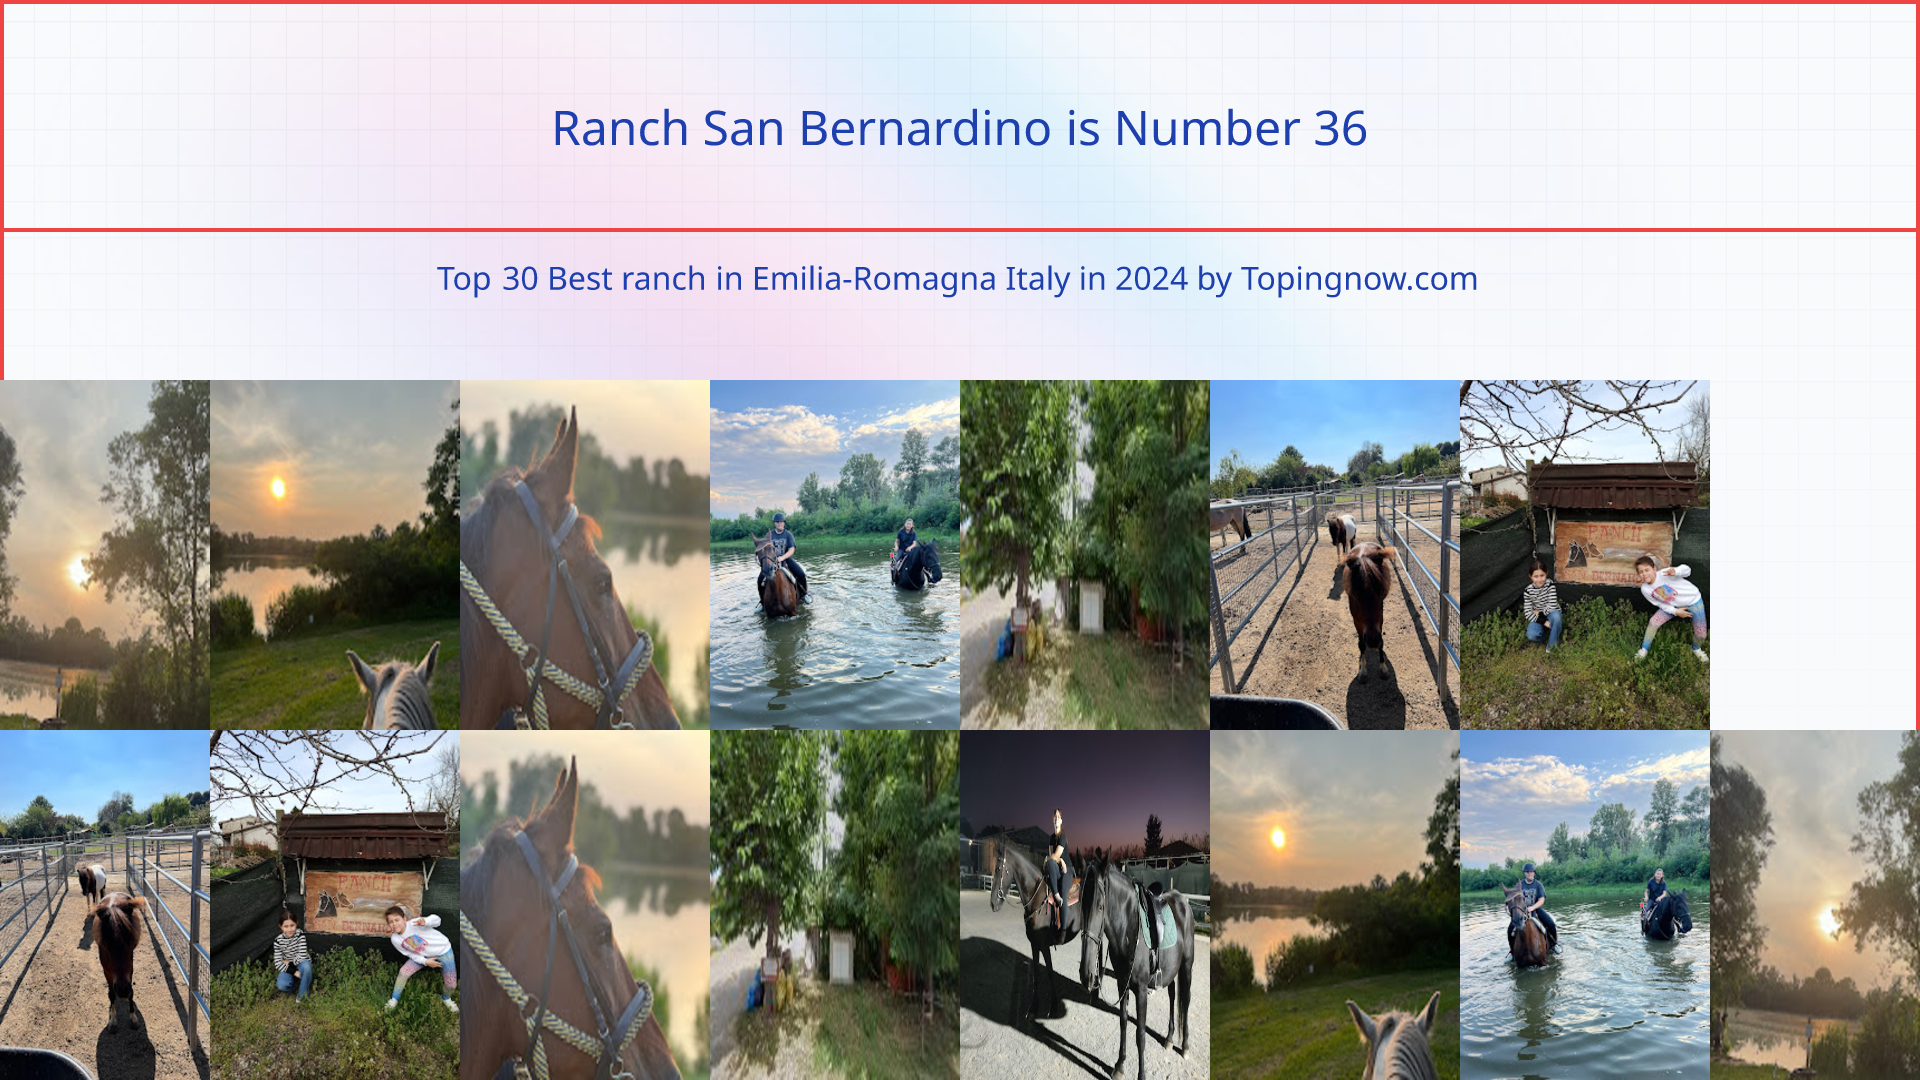 Ranch San Bernardino: Top 30 Best ranch in Emilia-Romagna Italy in 2024